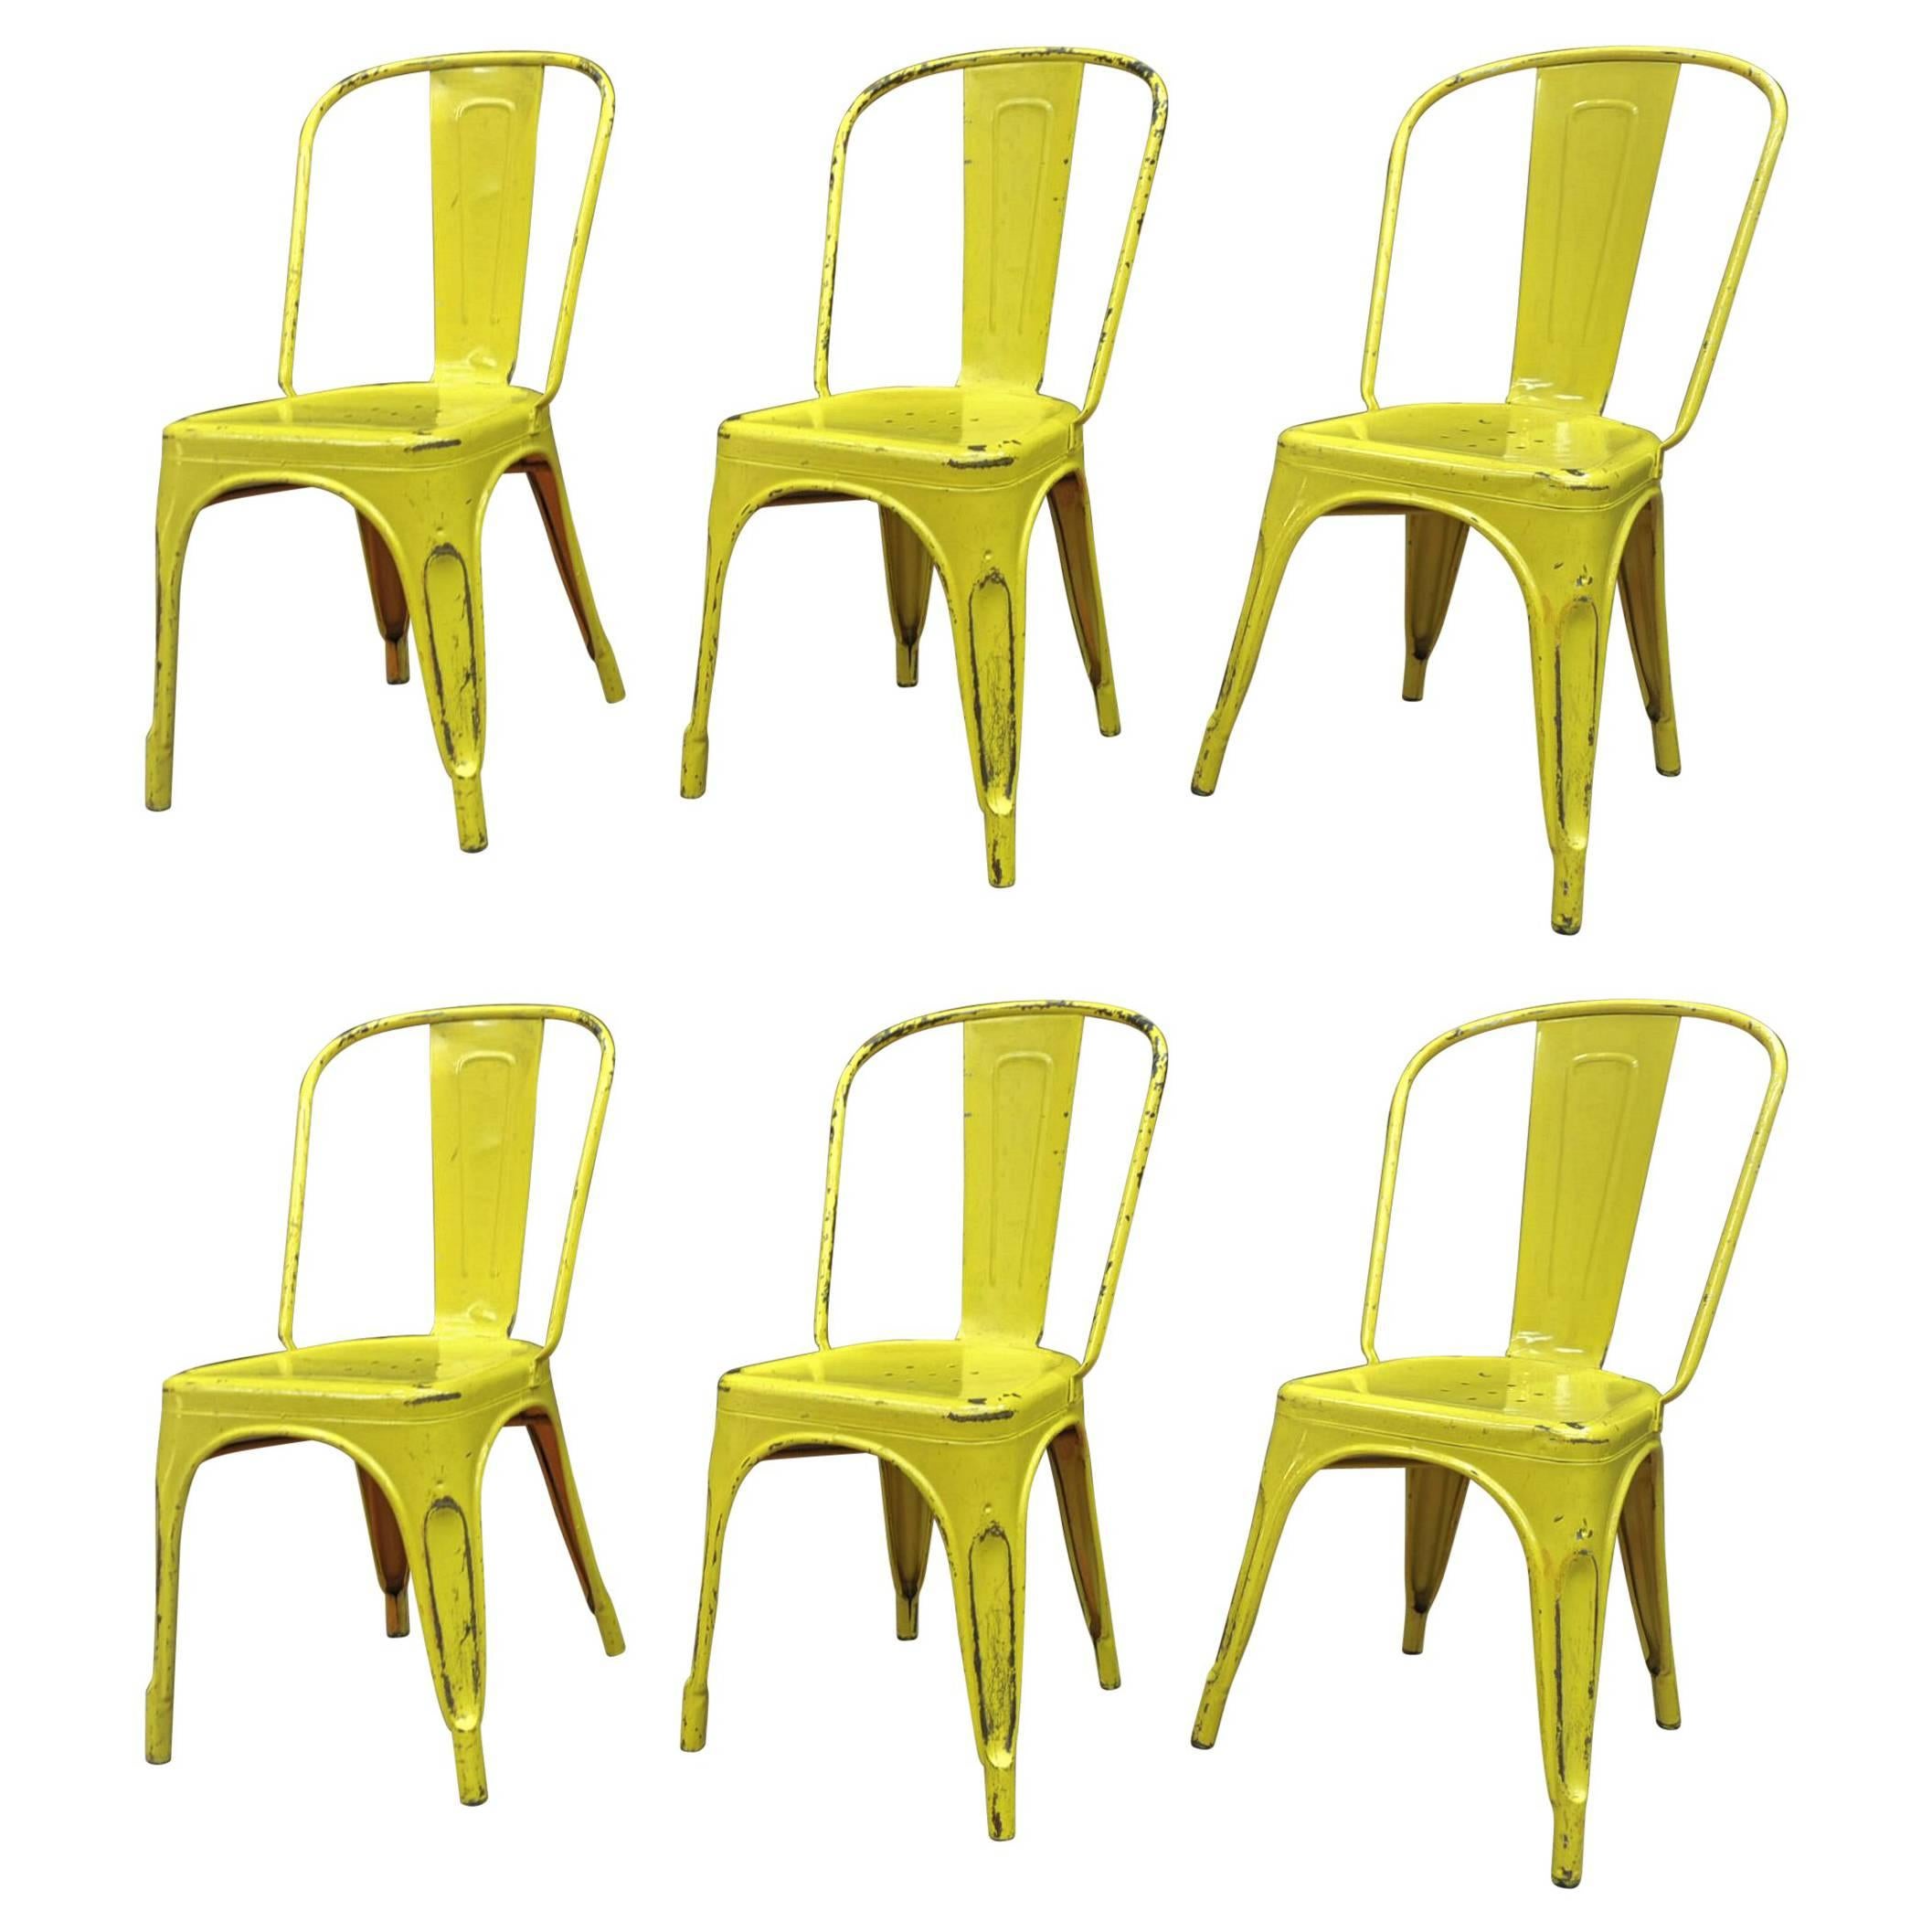 6 Vintage 1950 Tolix Chairs Yellow Patina